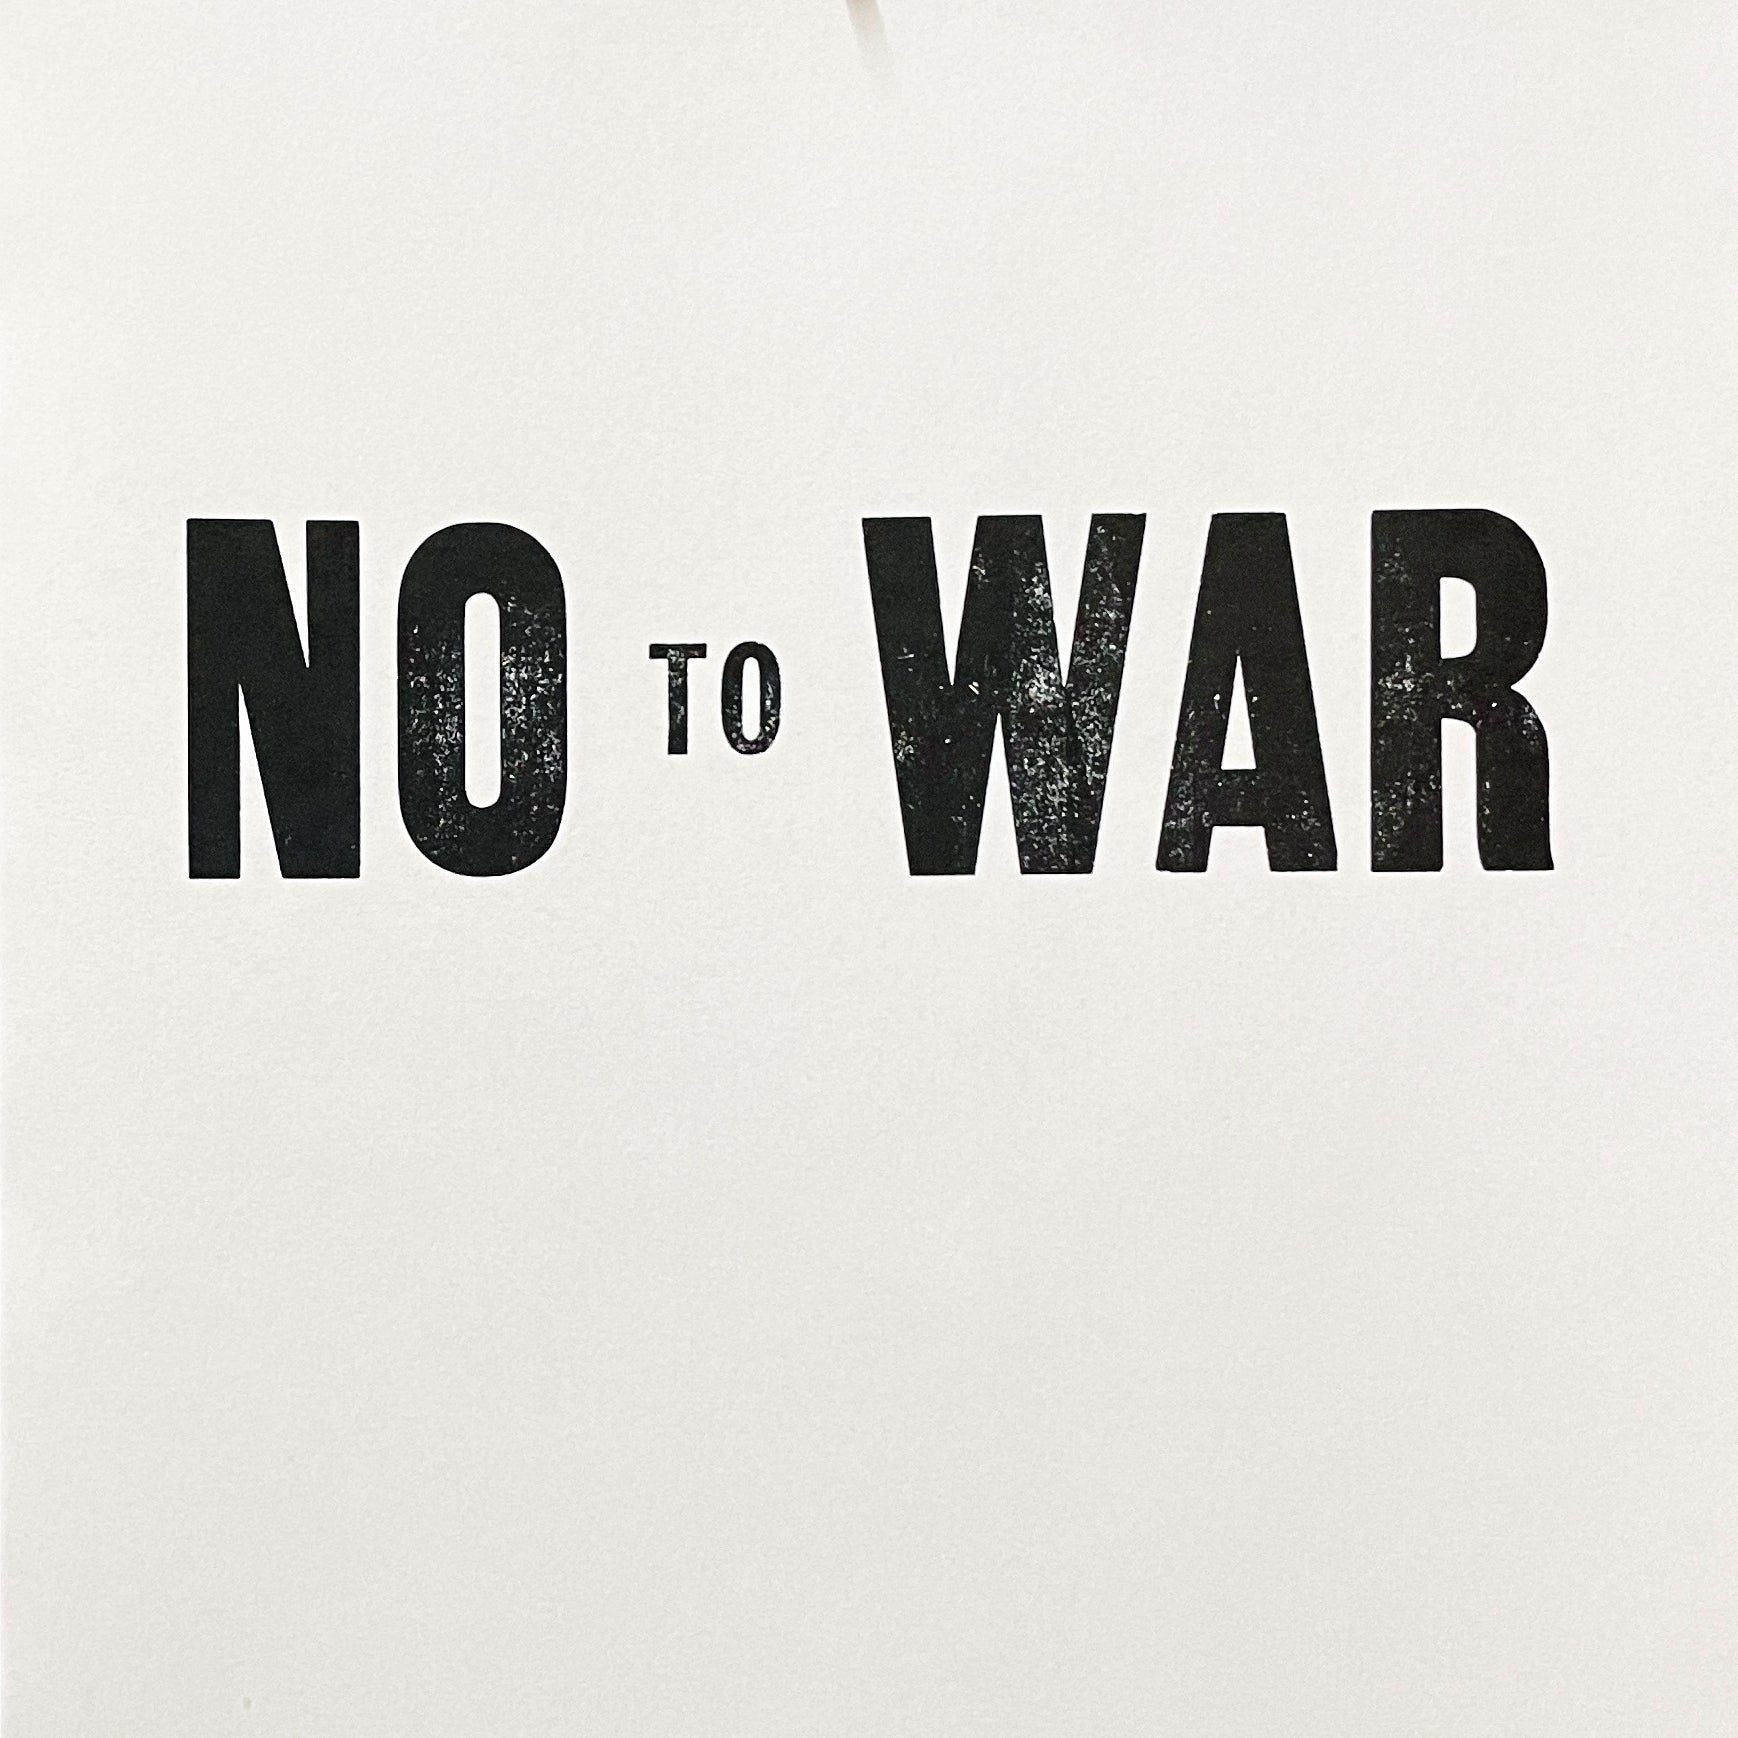 No to War poster